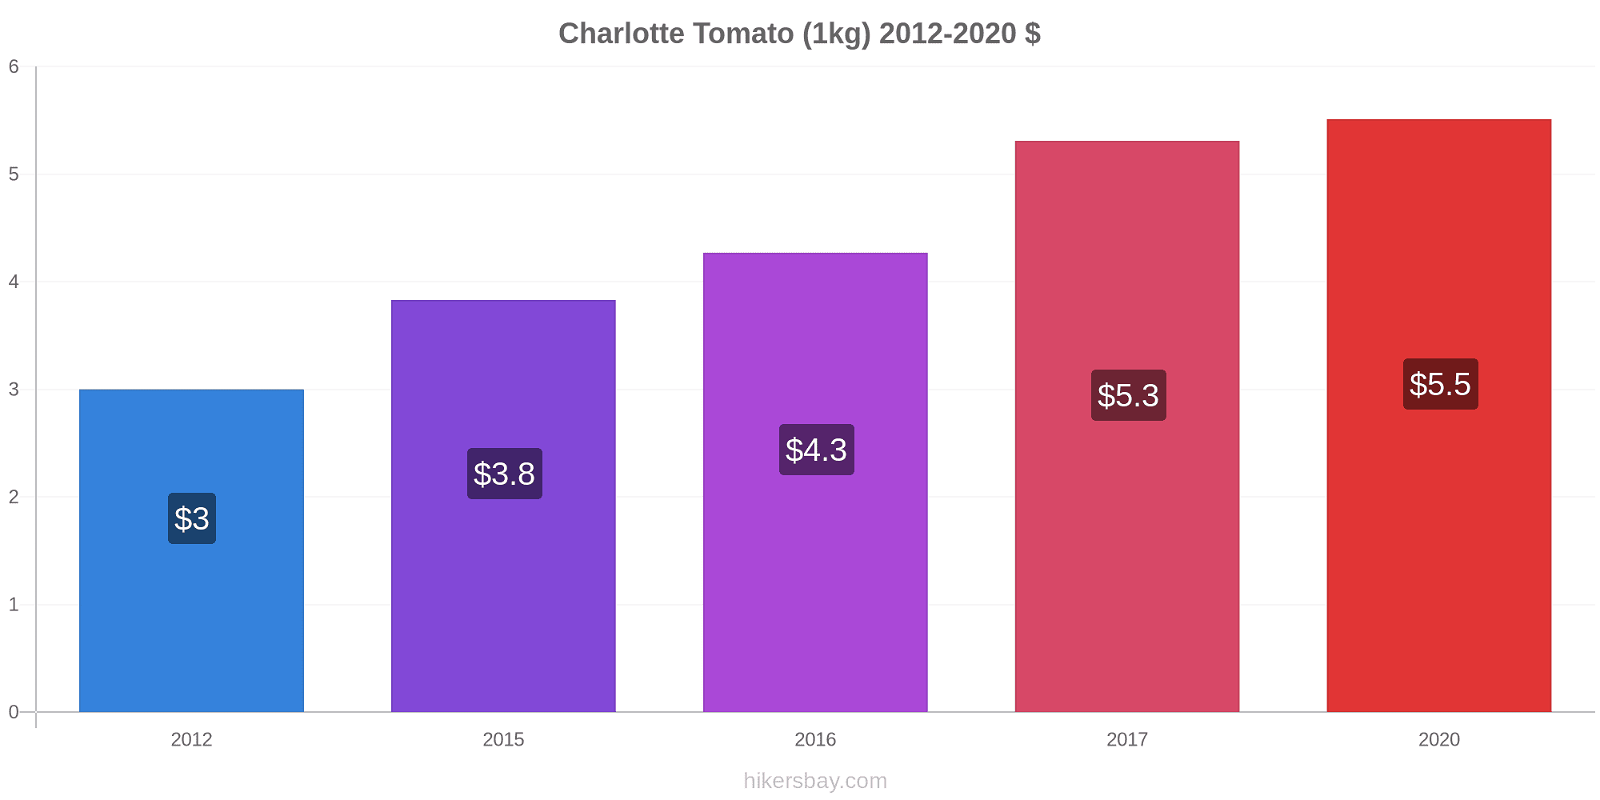 Charlotte price changes Tomato (1kg) hikersbay.com